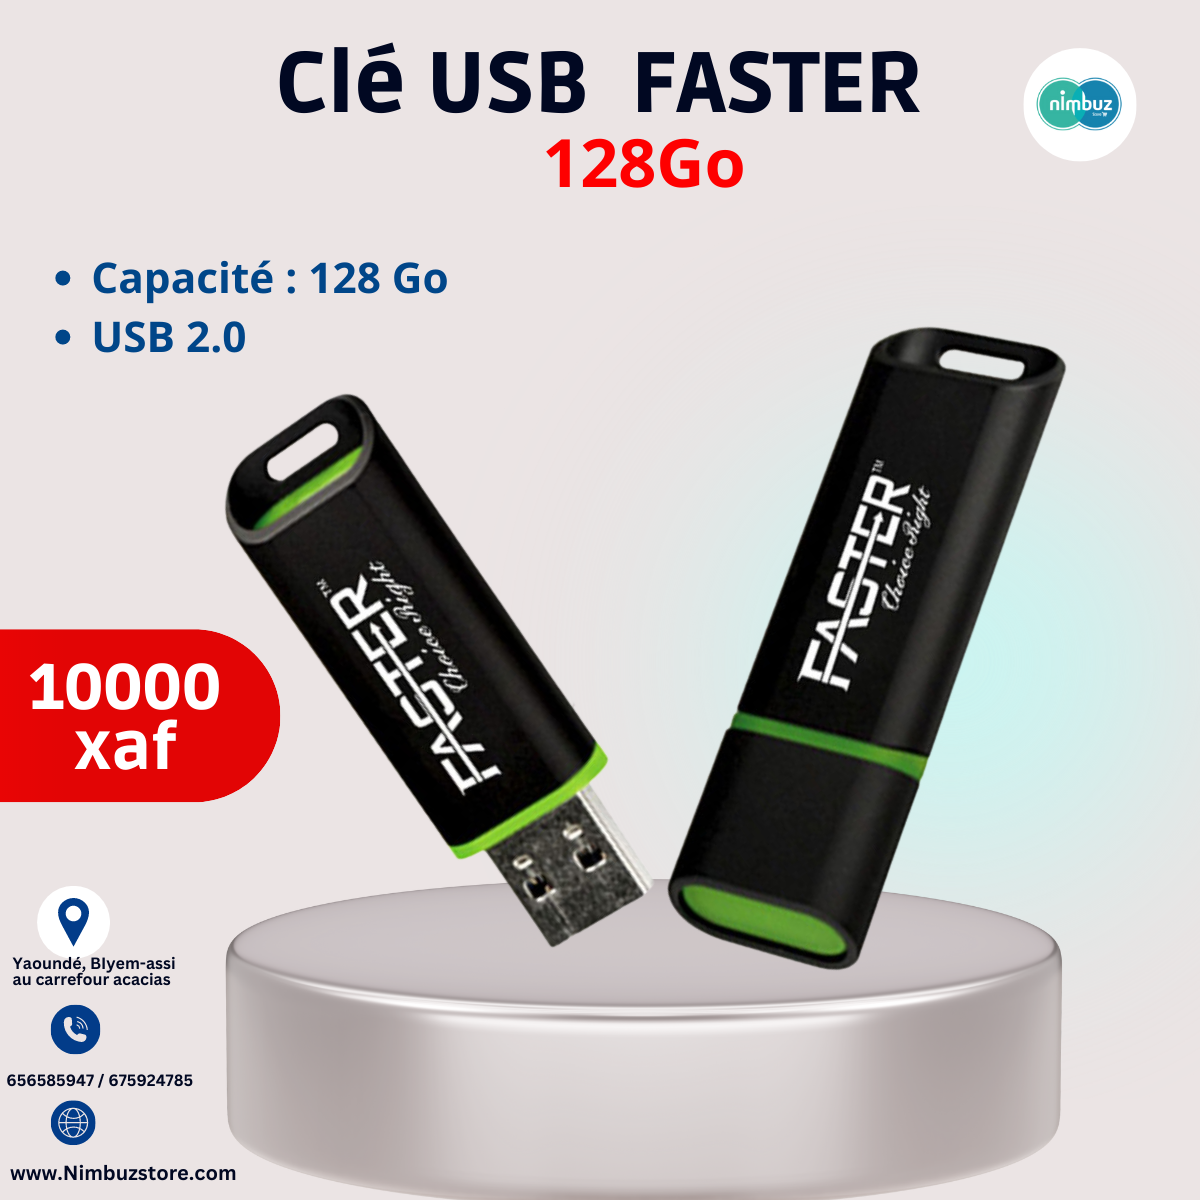 64Go clé USB - SanDisk - Nimbuz Store